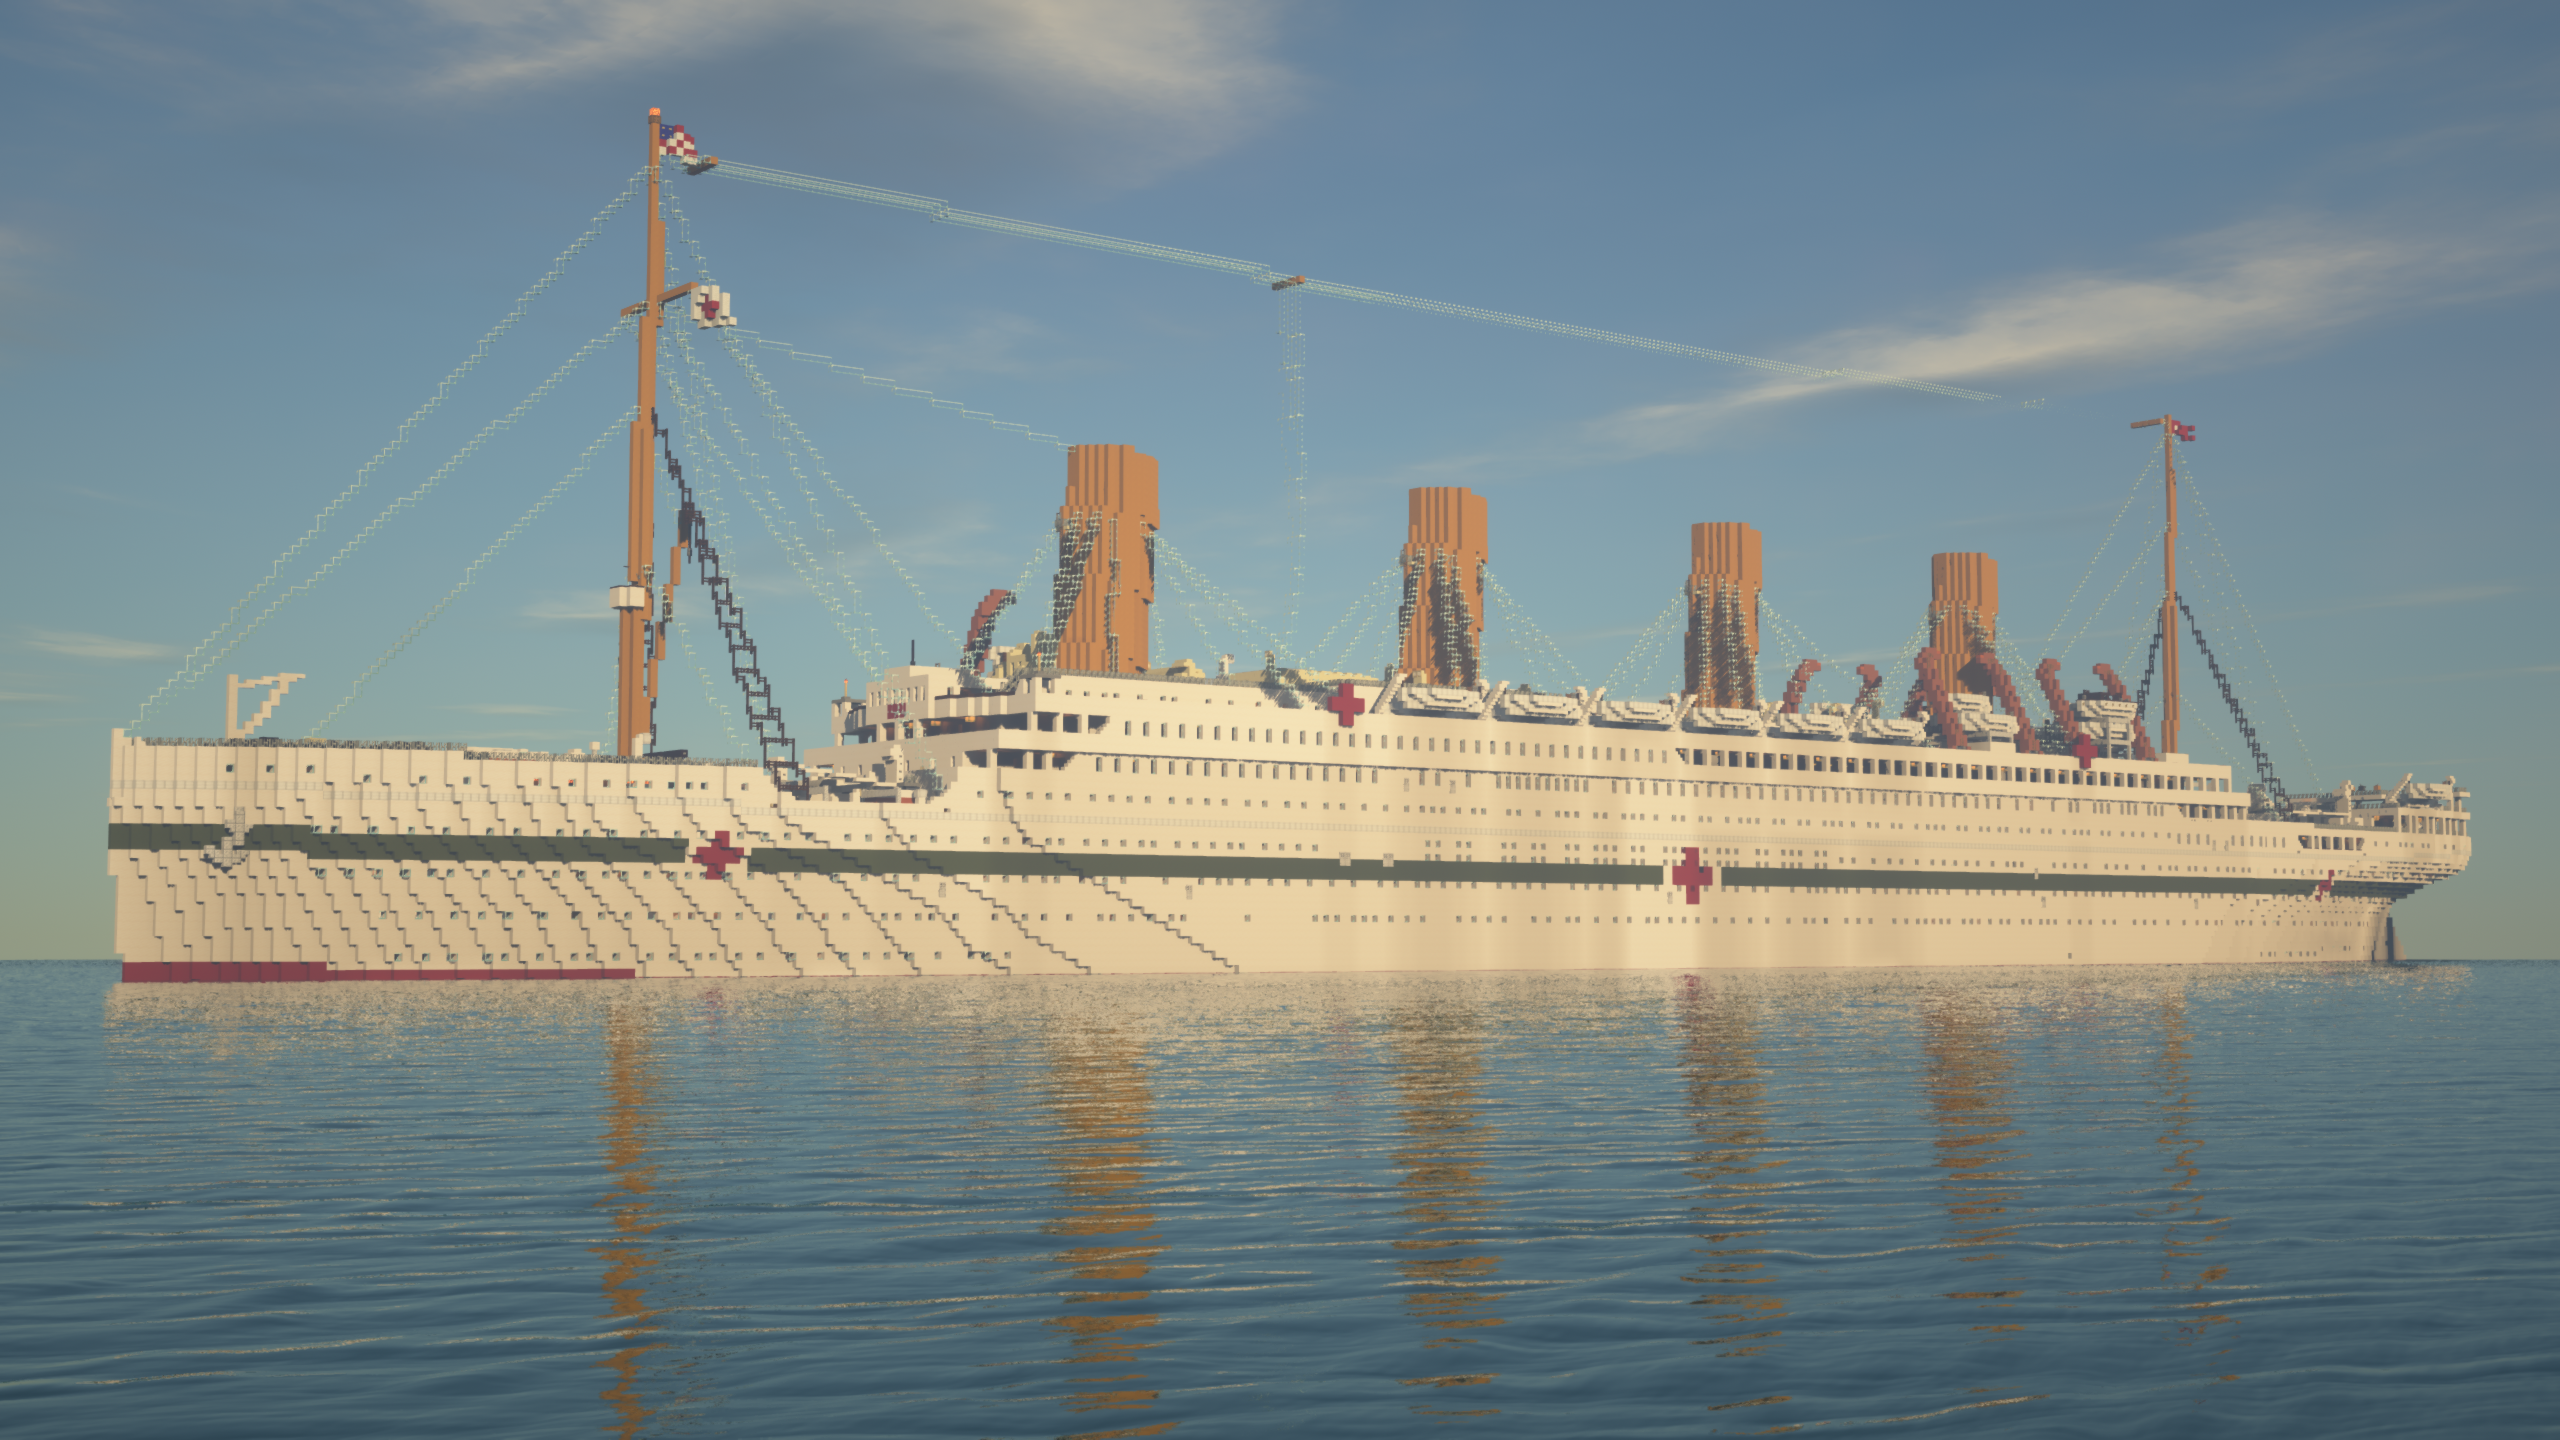 HMHS Britannic, the sister ship of the Titanic